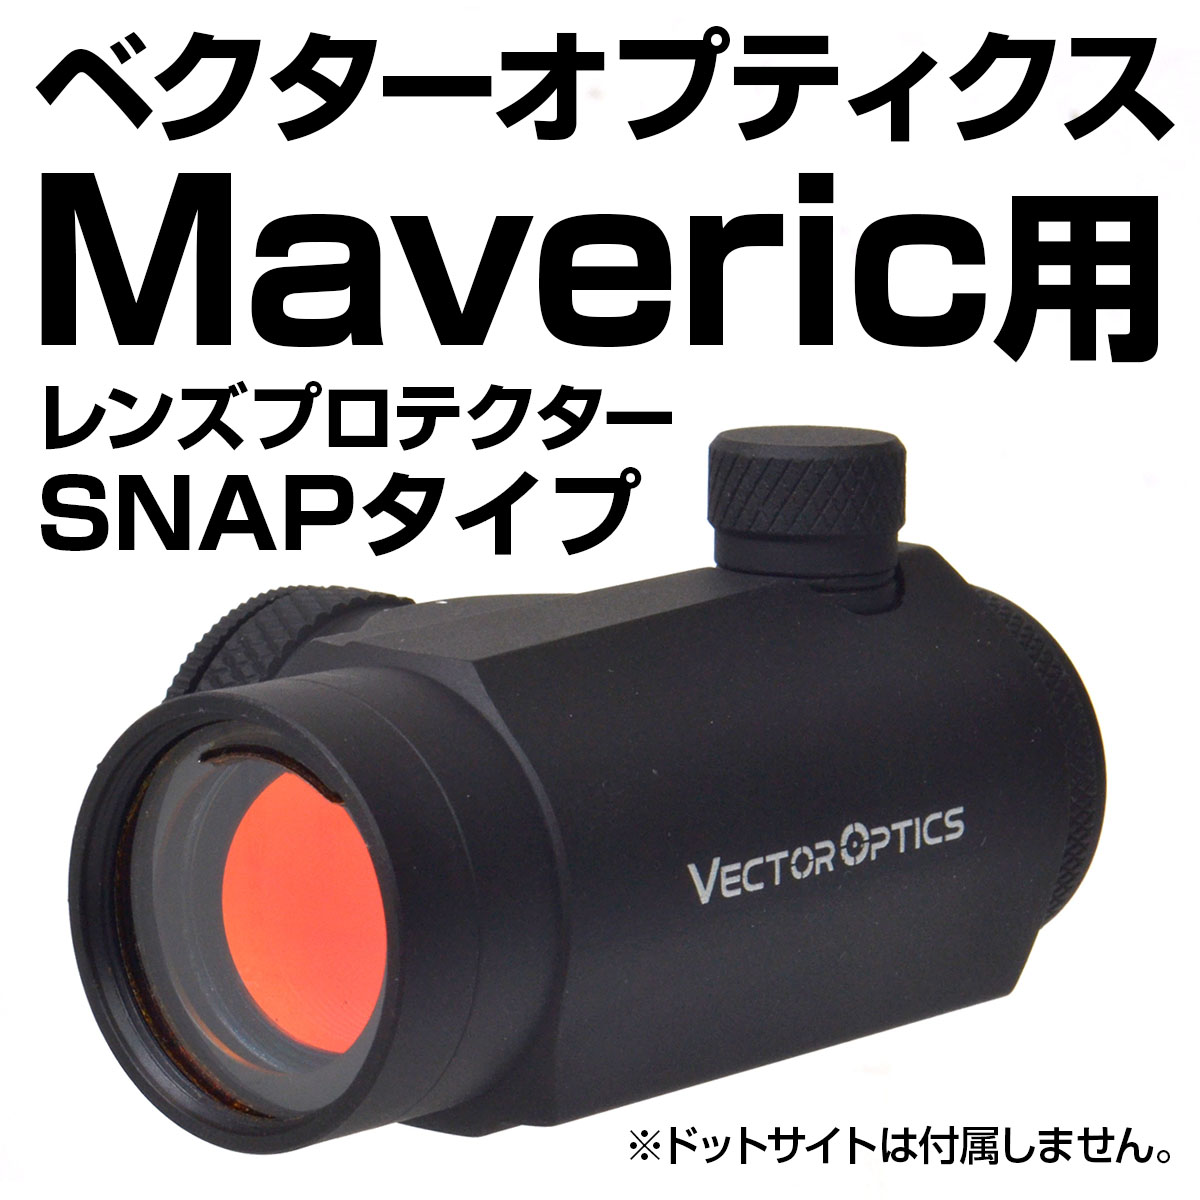 VectorOptics Maverick用 スナップフィットプロテクター画像